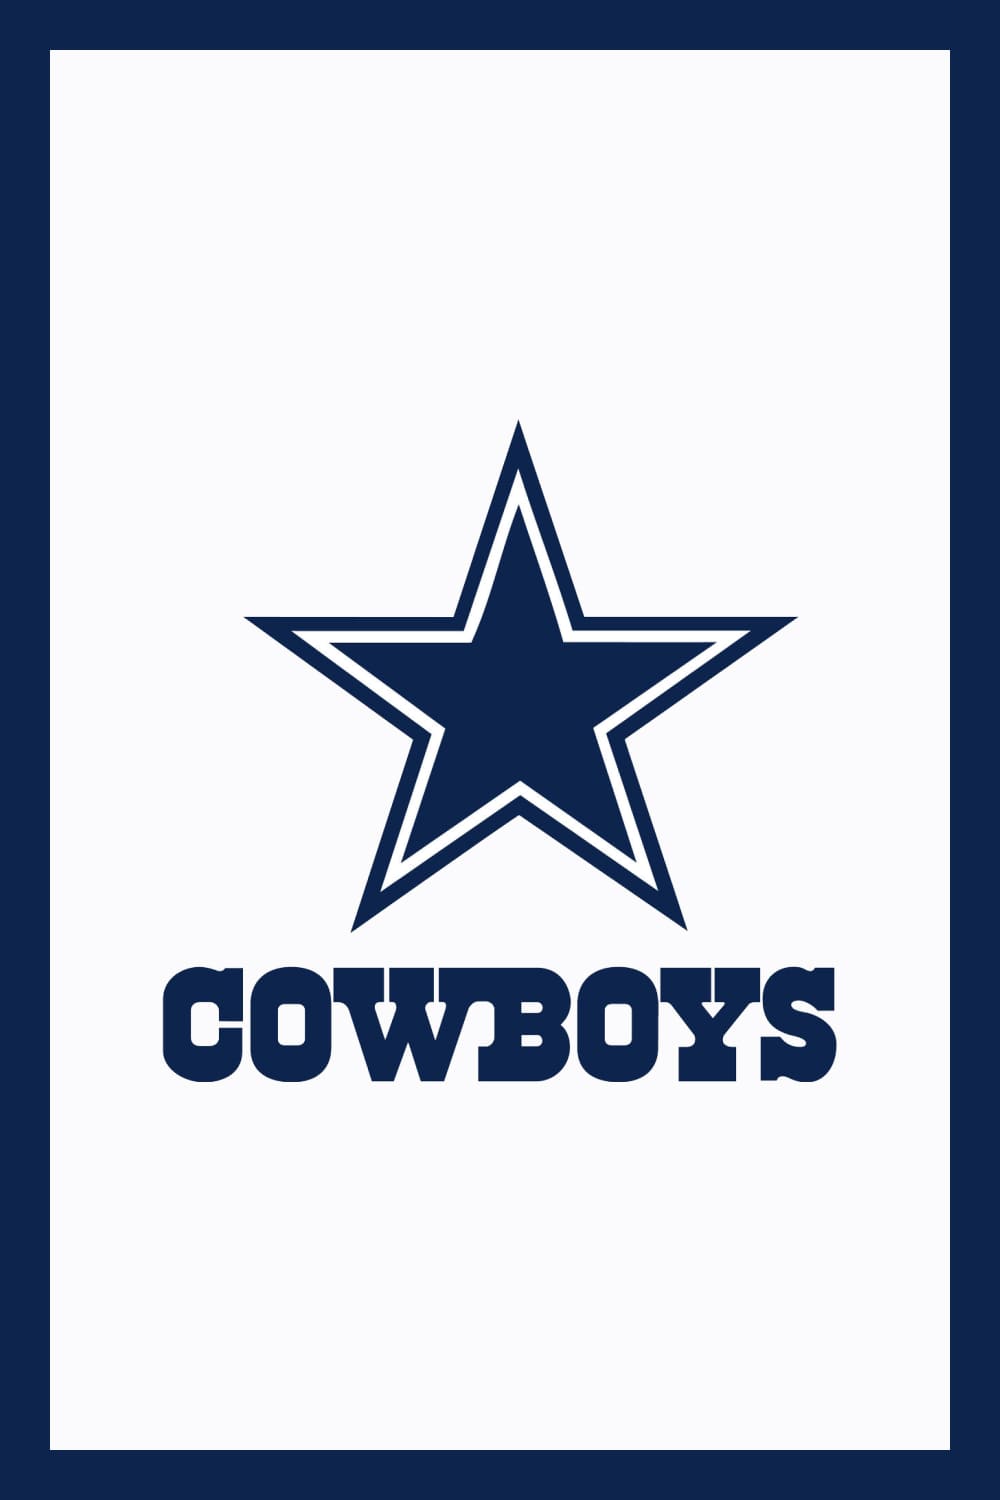 Dallas Cowboys Star Background Stock Photos - Free & Royalty-Free